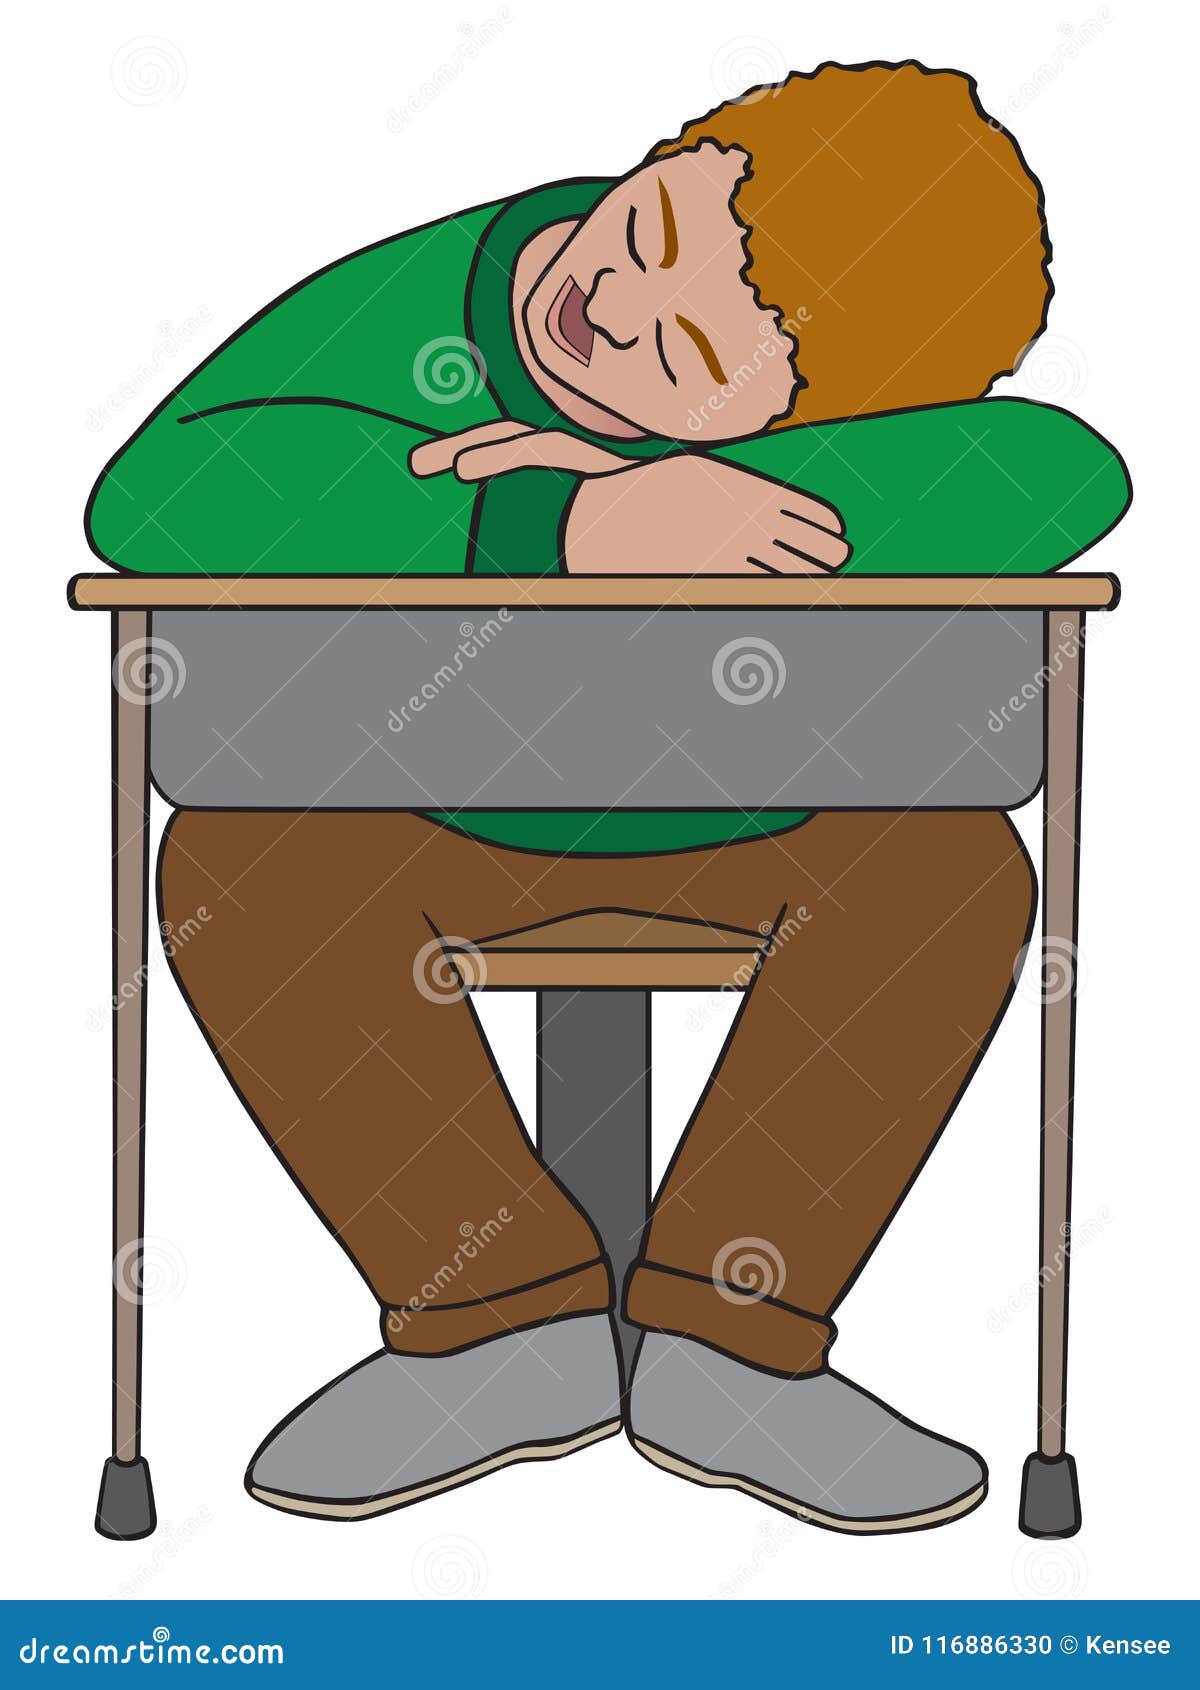 Sleeping Cartoon Student Stock Vector Illustration Of Longer